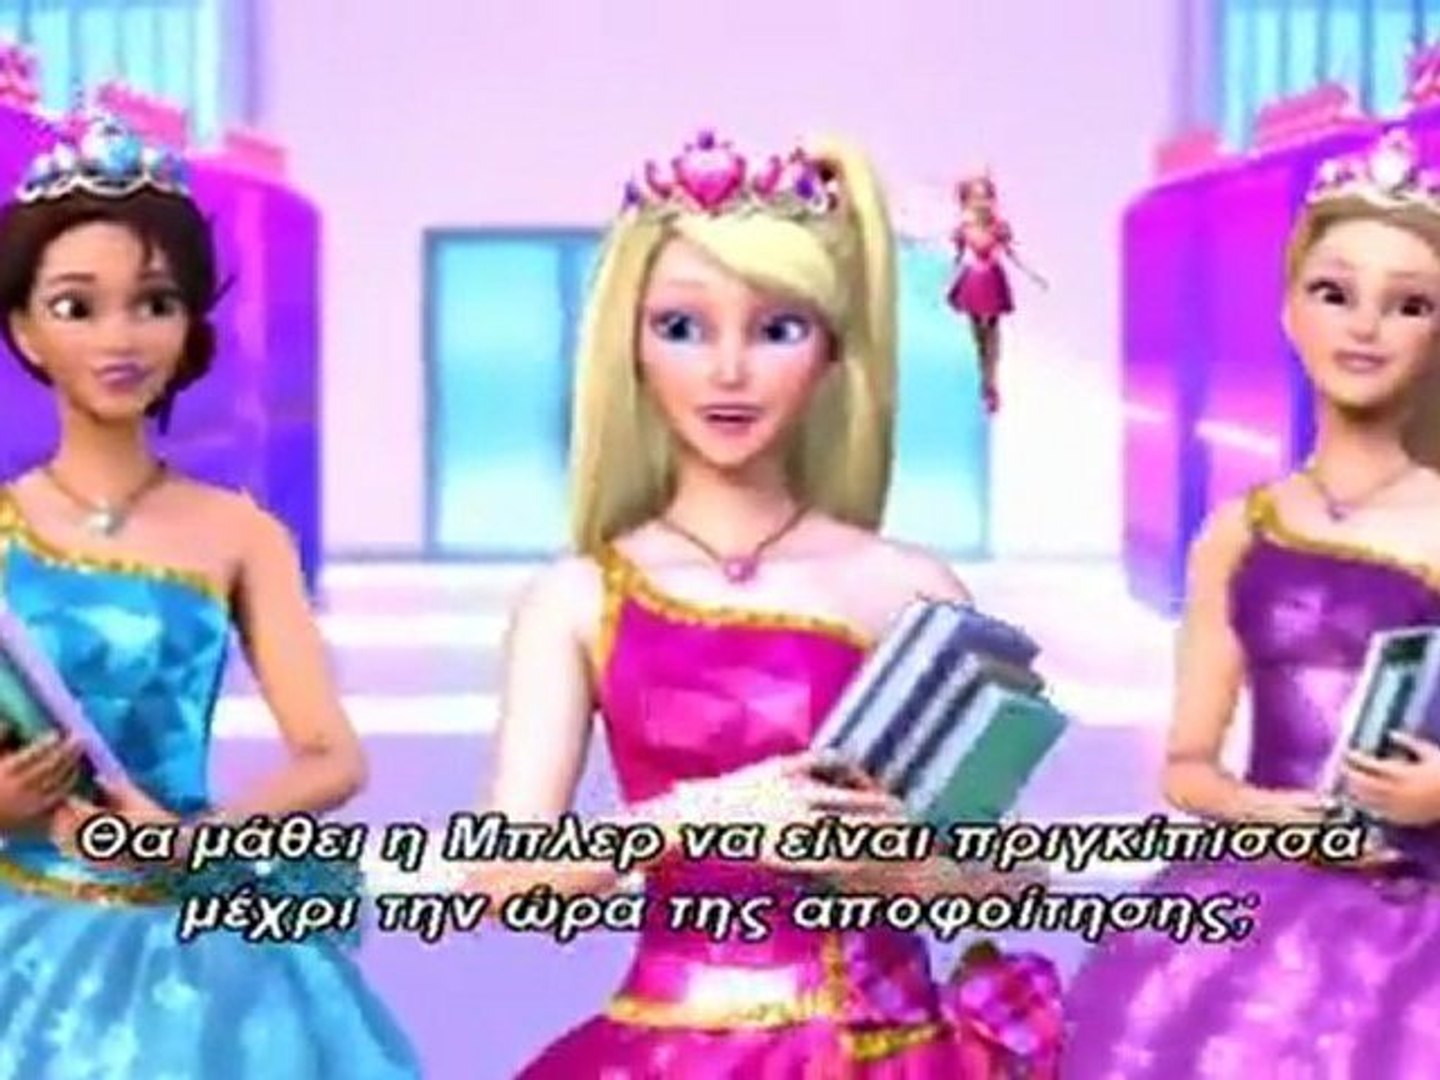 barbie apprentie princesse dailymotion